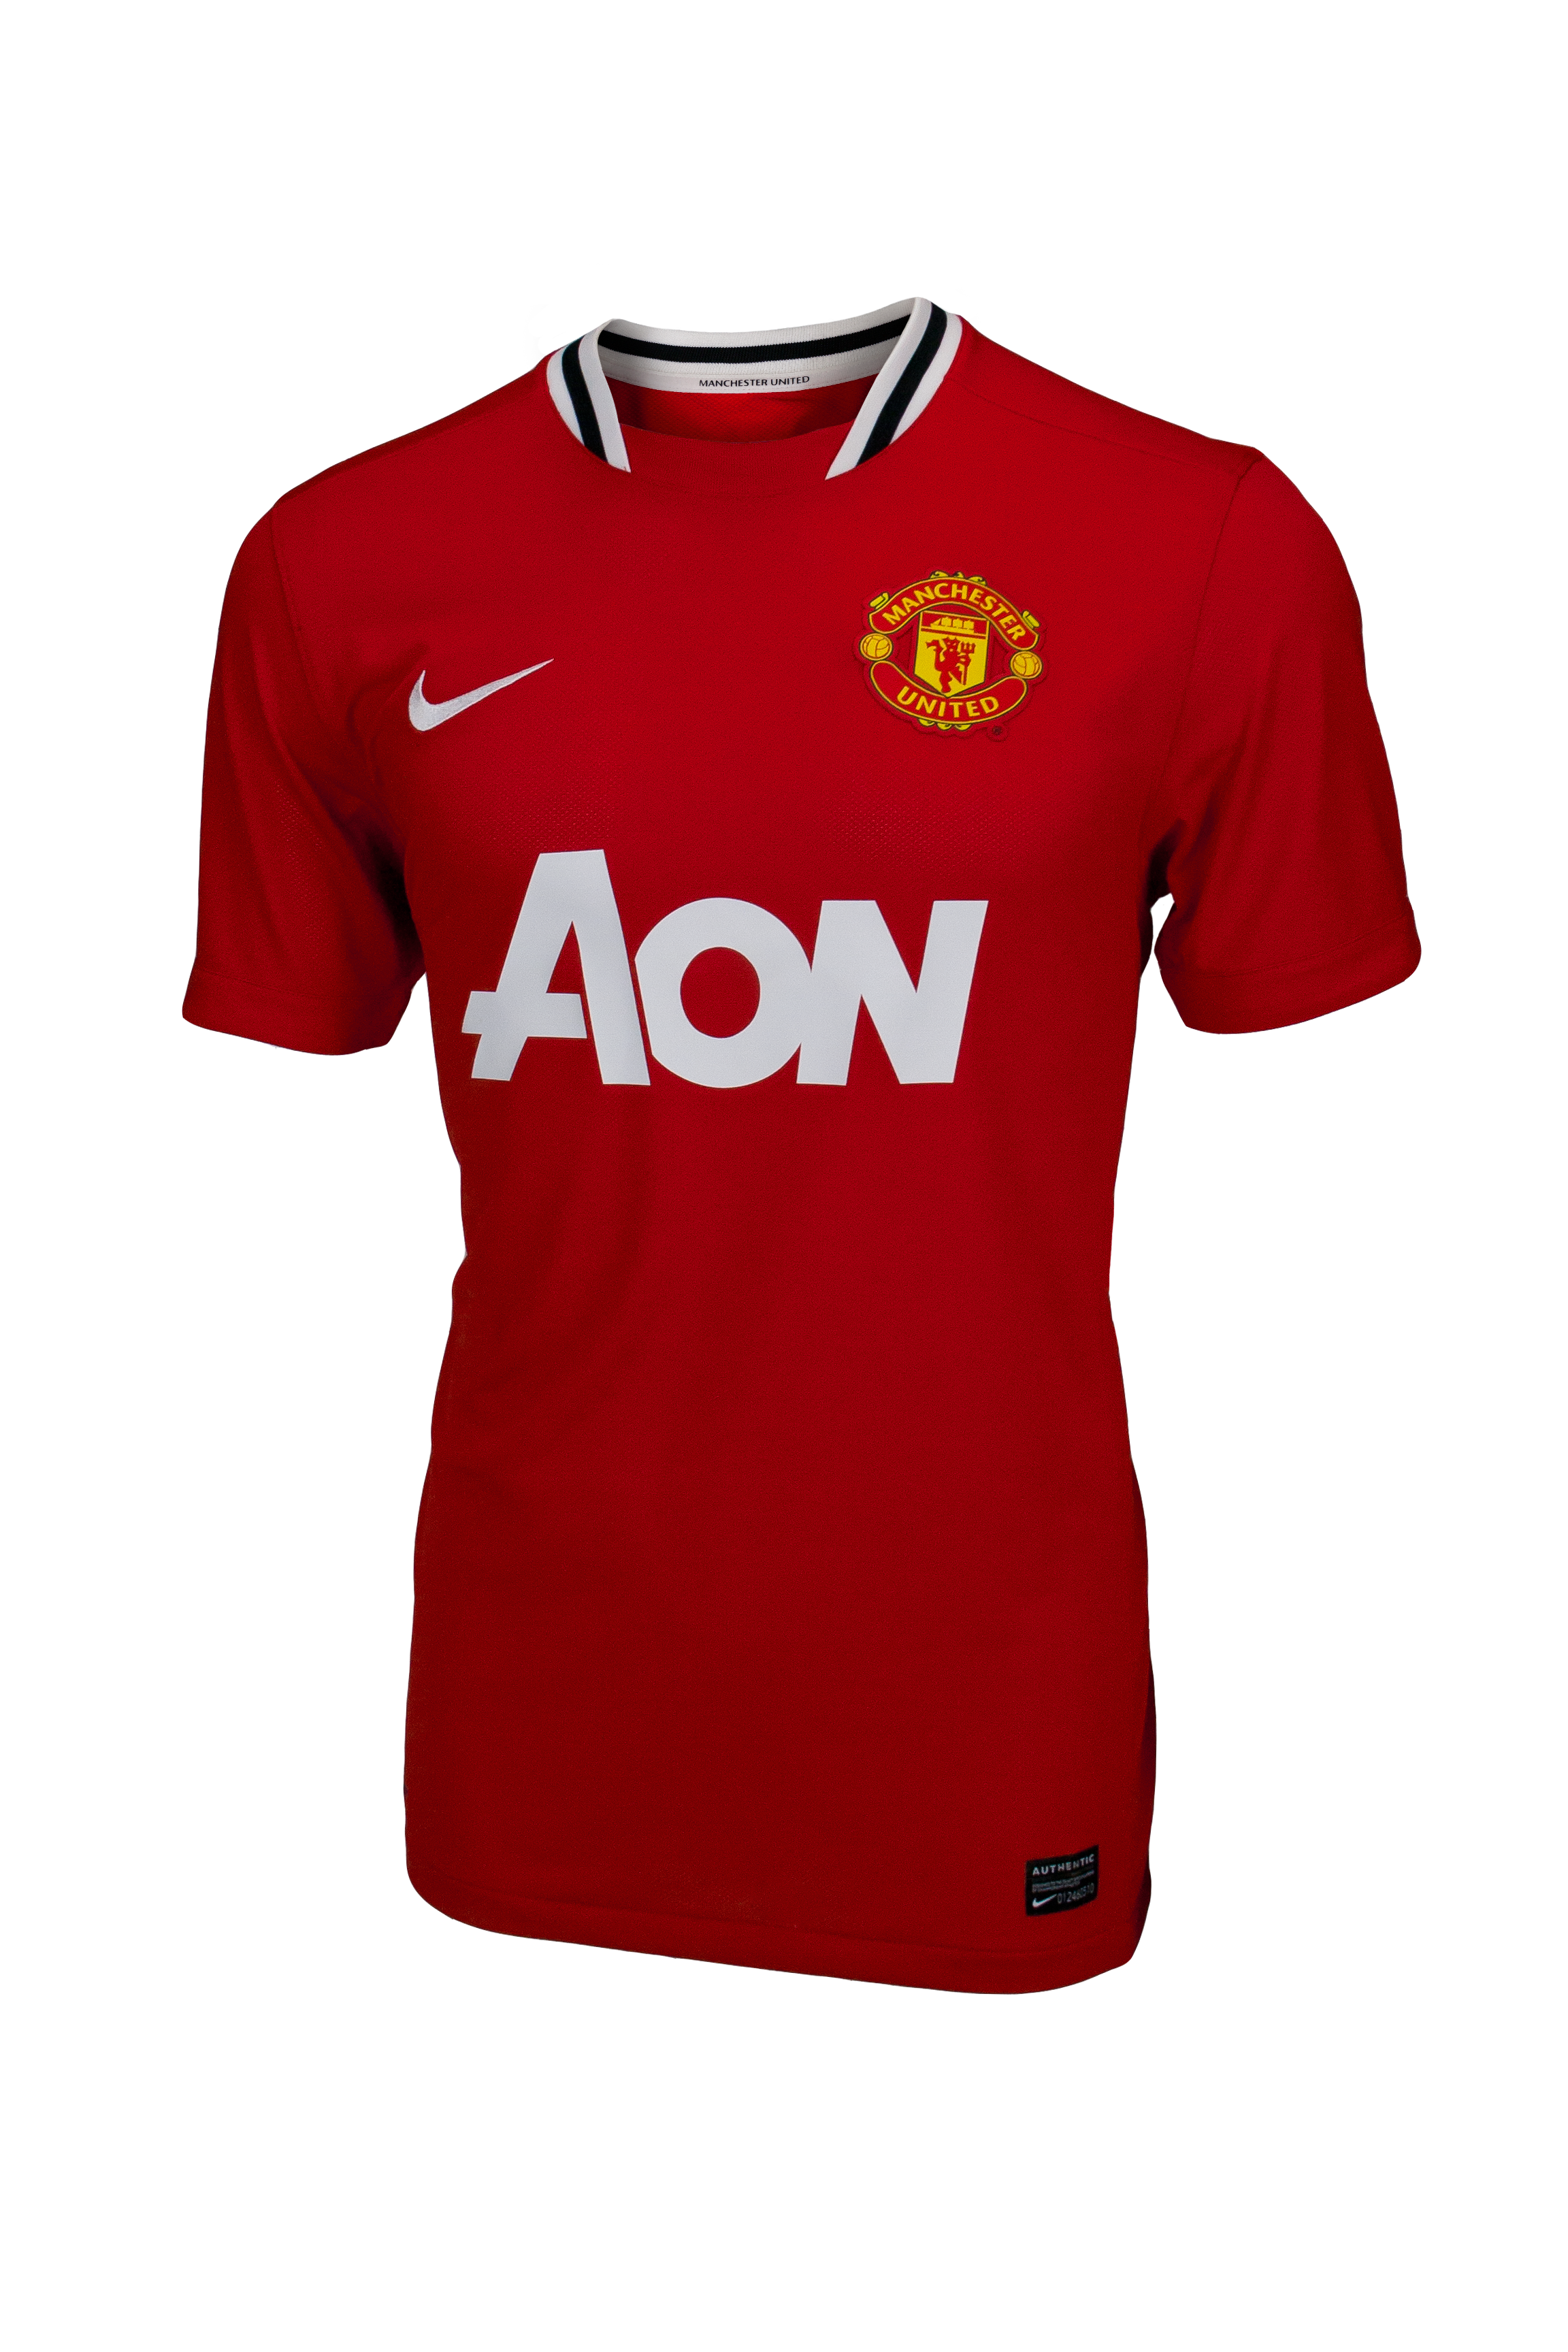 New Nike Manchester United 2011/12 Home Kit Revealed